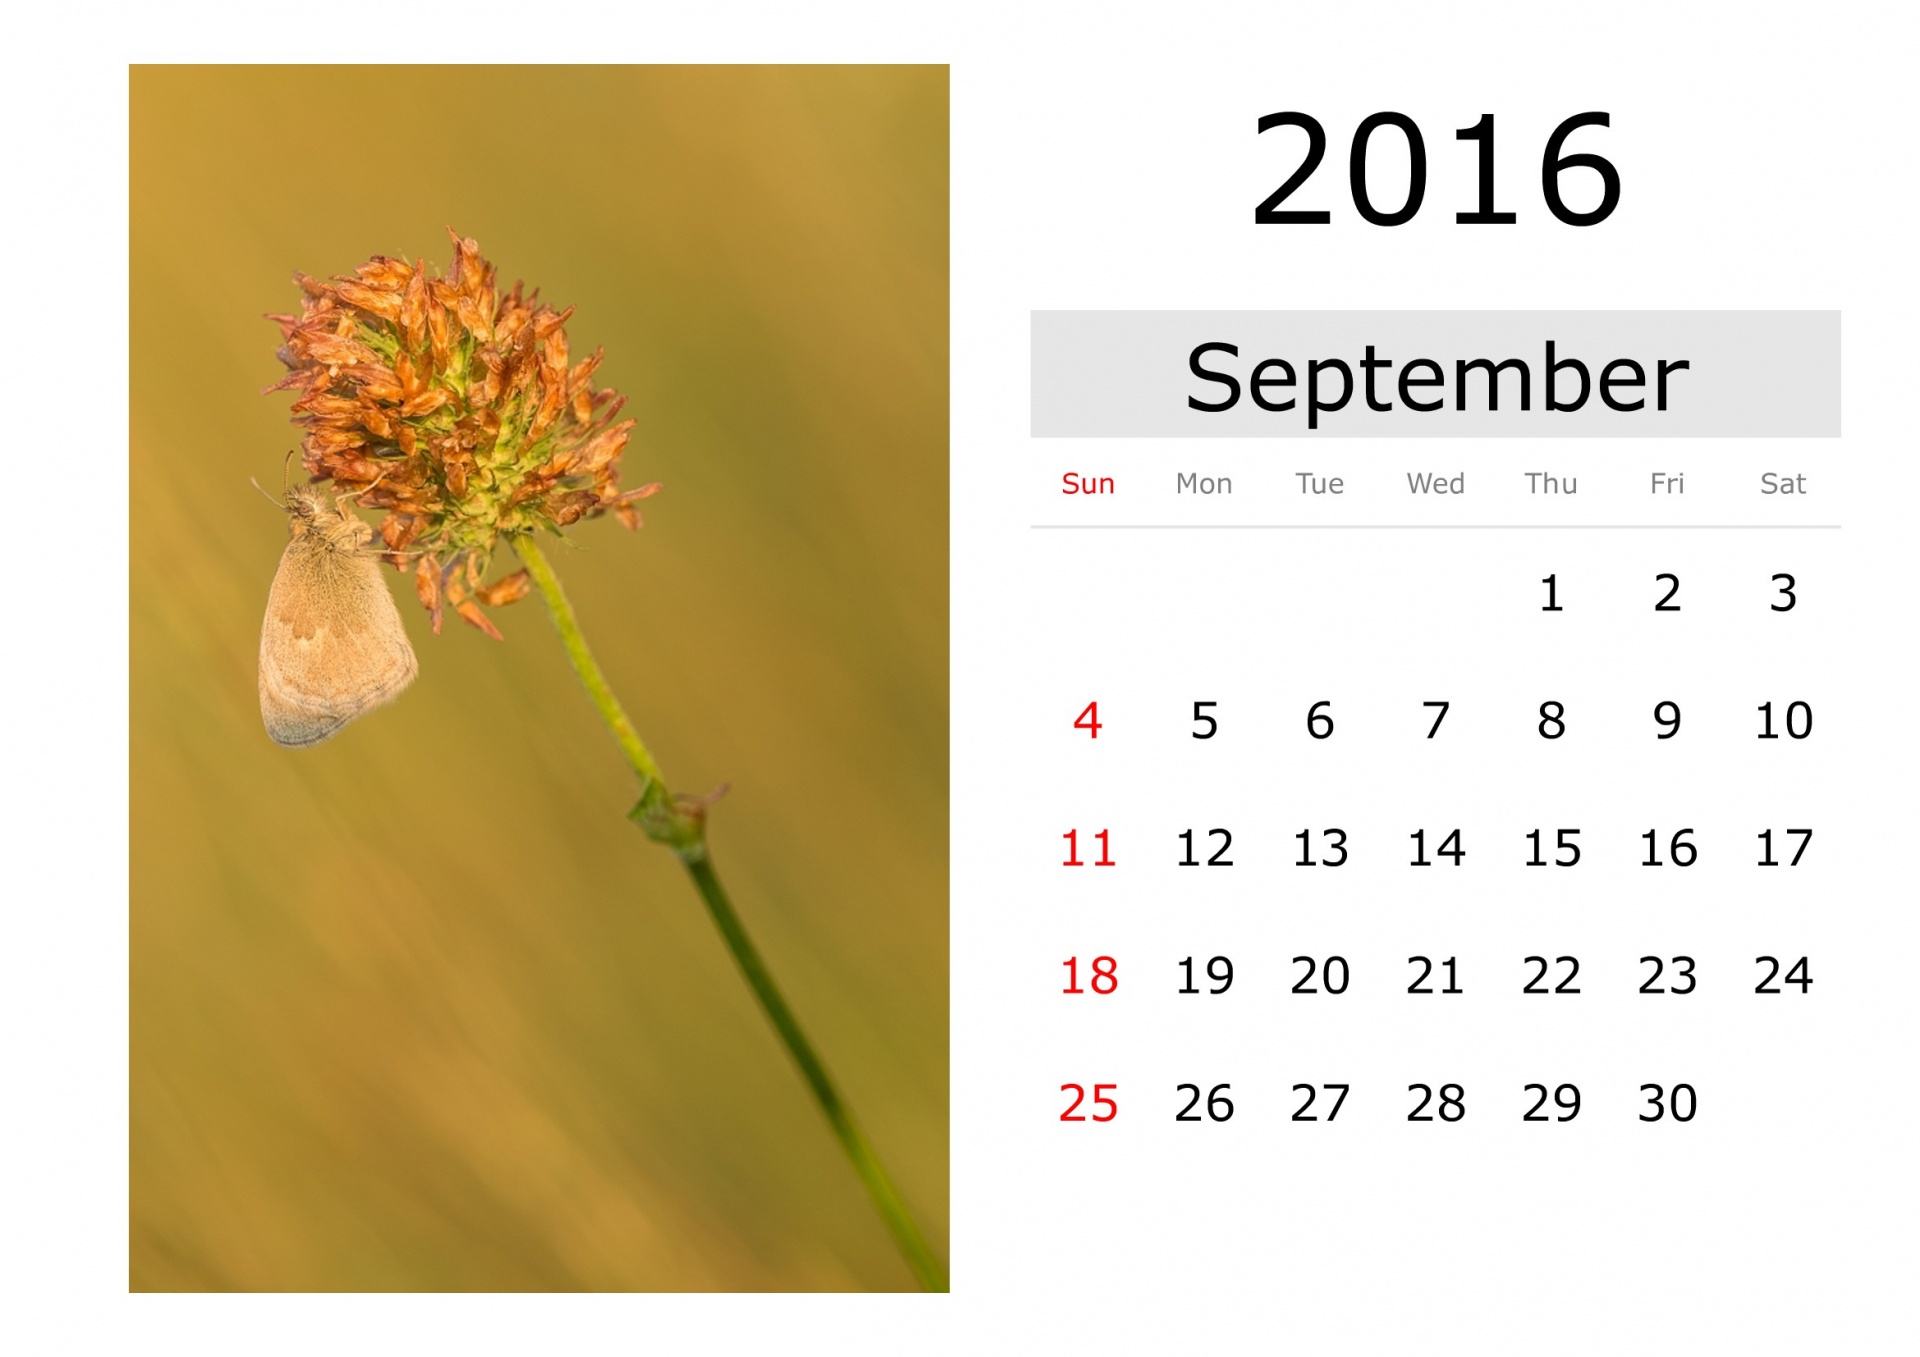 Calendar - September 2016 (English)